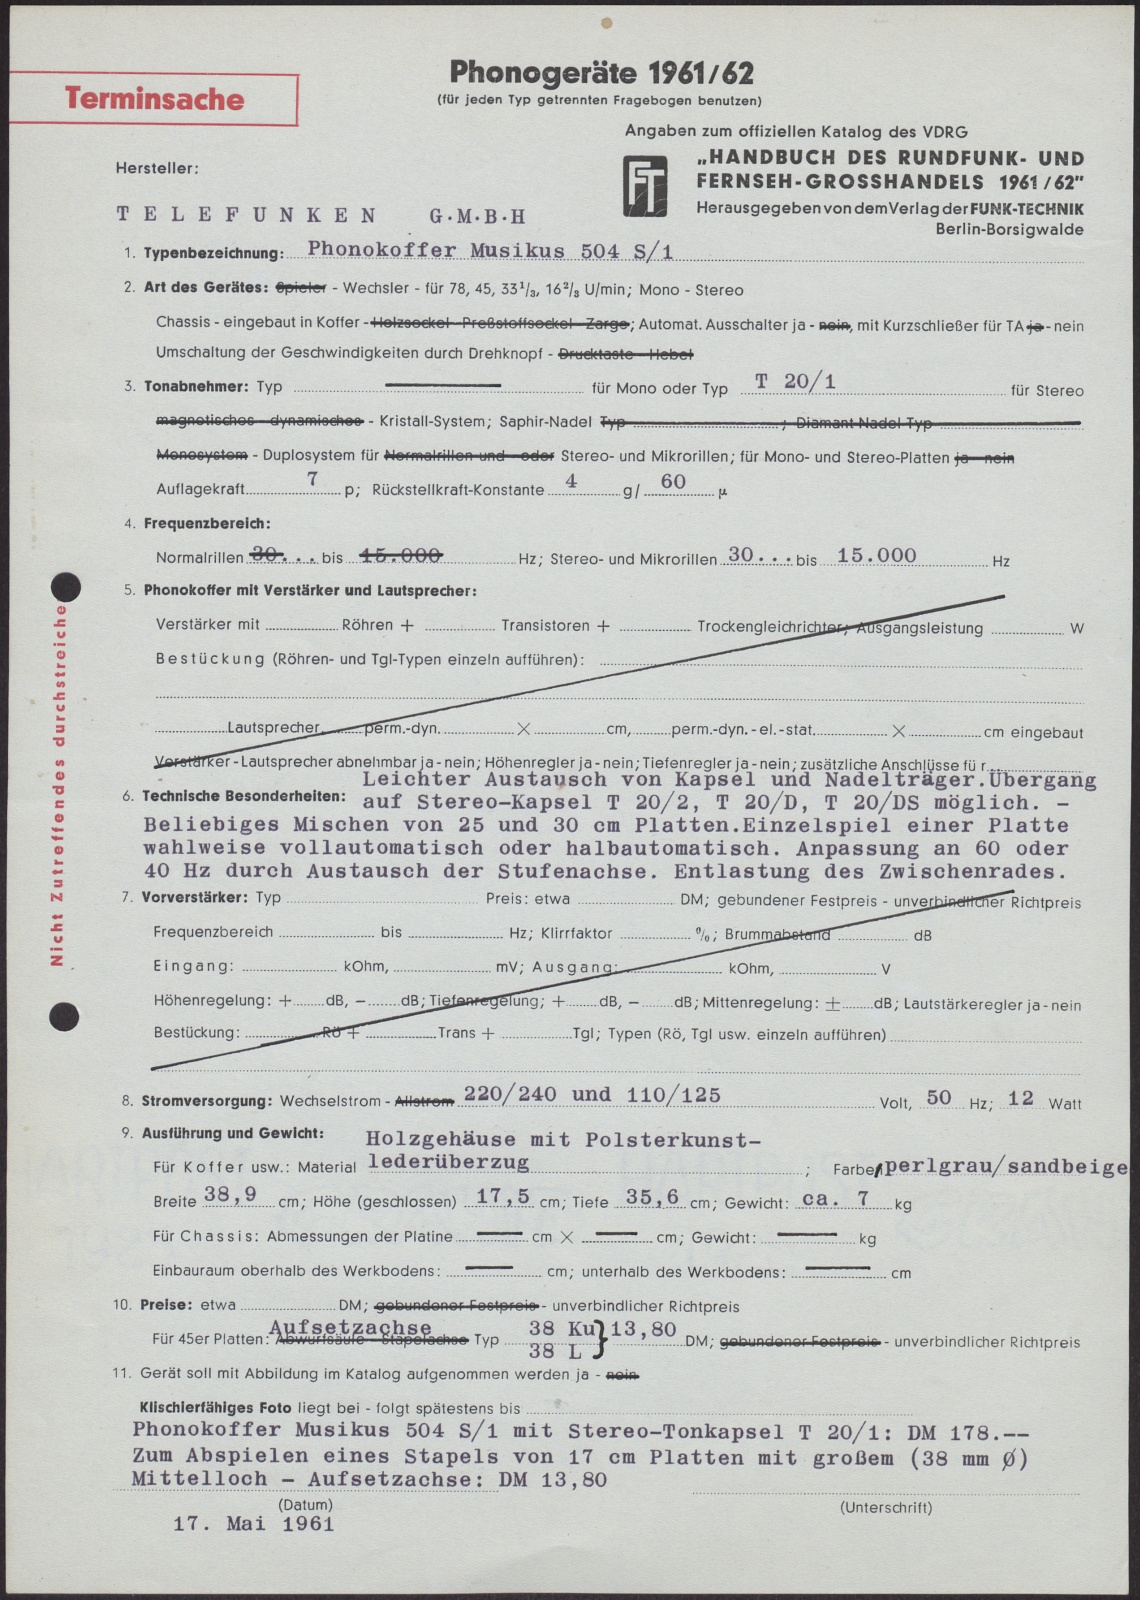 Datenblatt: Phonogeräte 1961/62 Phonokoffer Musikus 504 S/1 (Stiftung Deutsches Technikmuseum Berlin CC0)